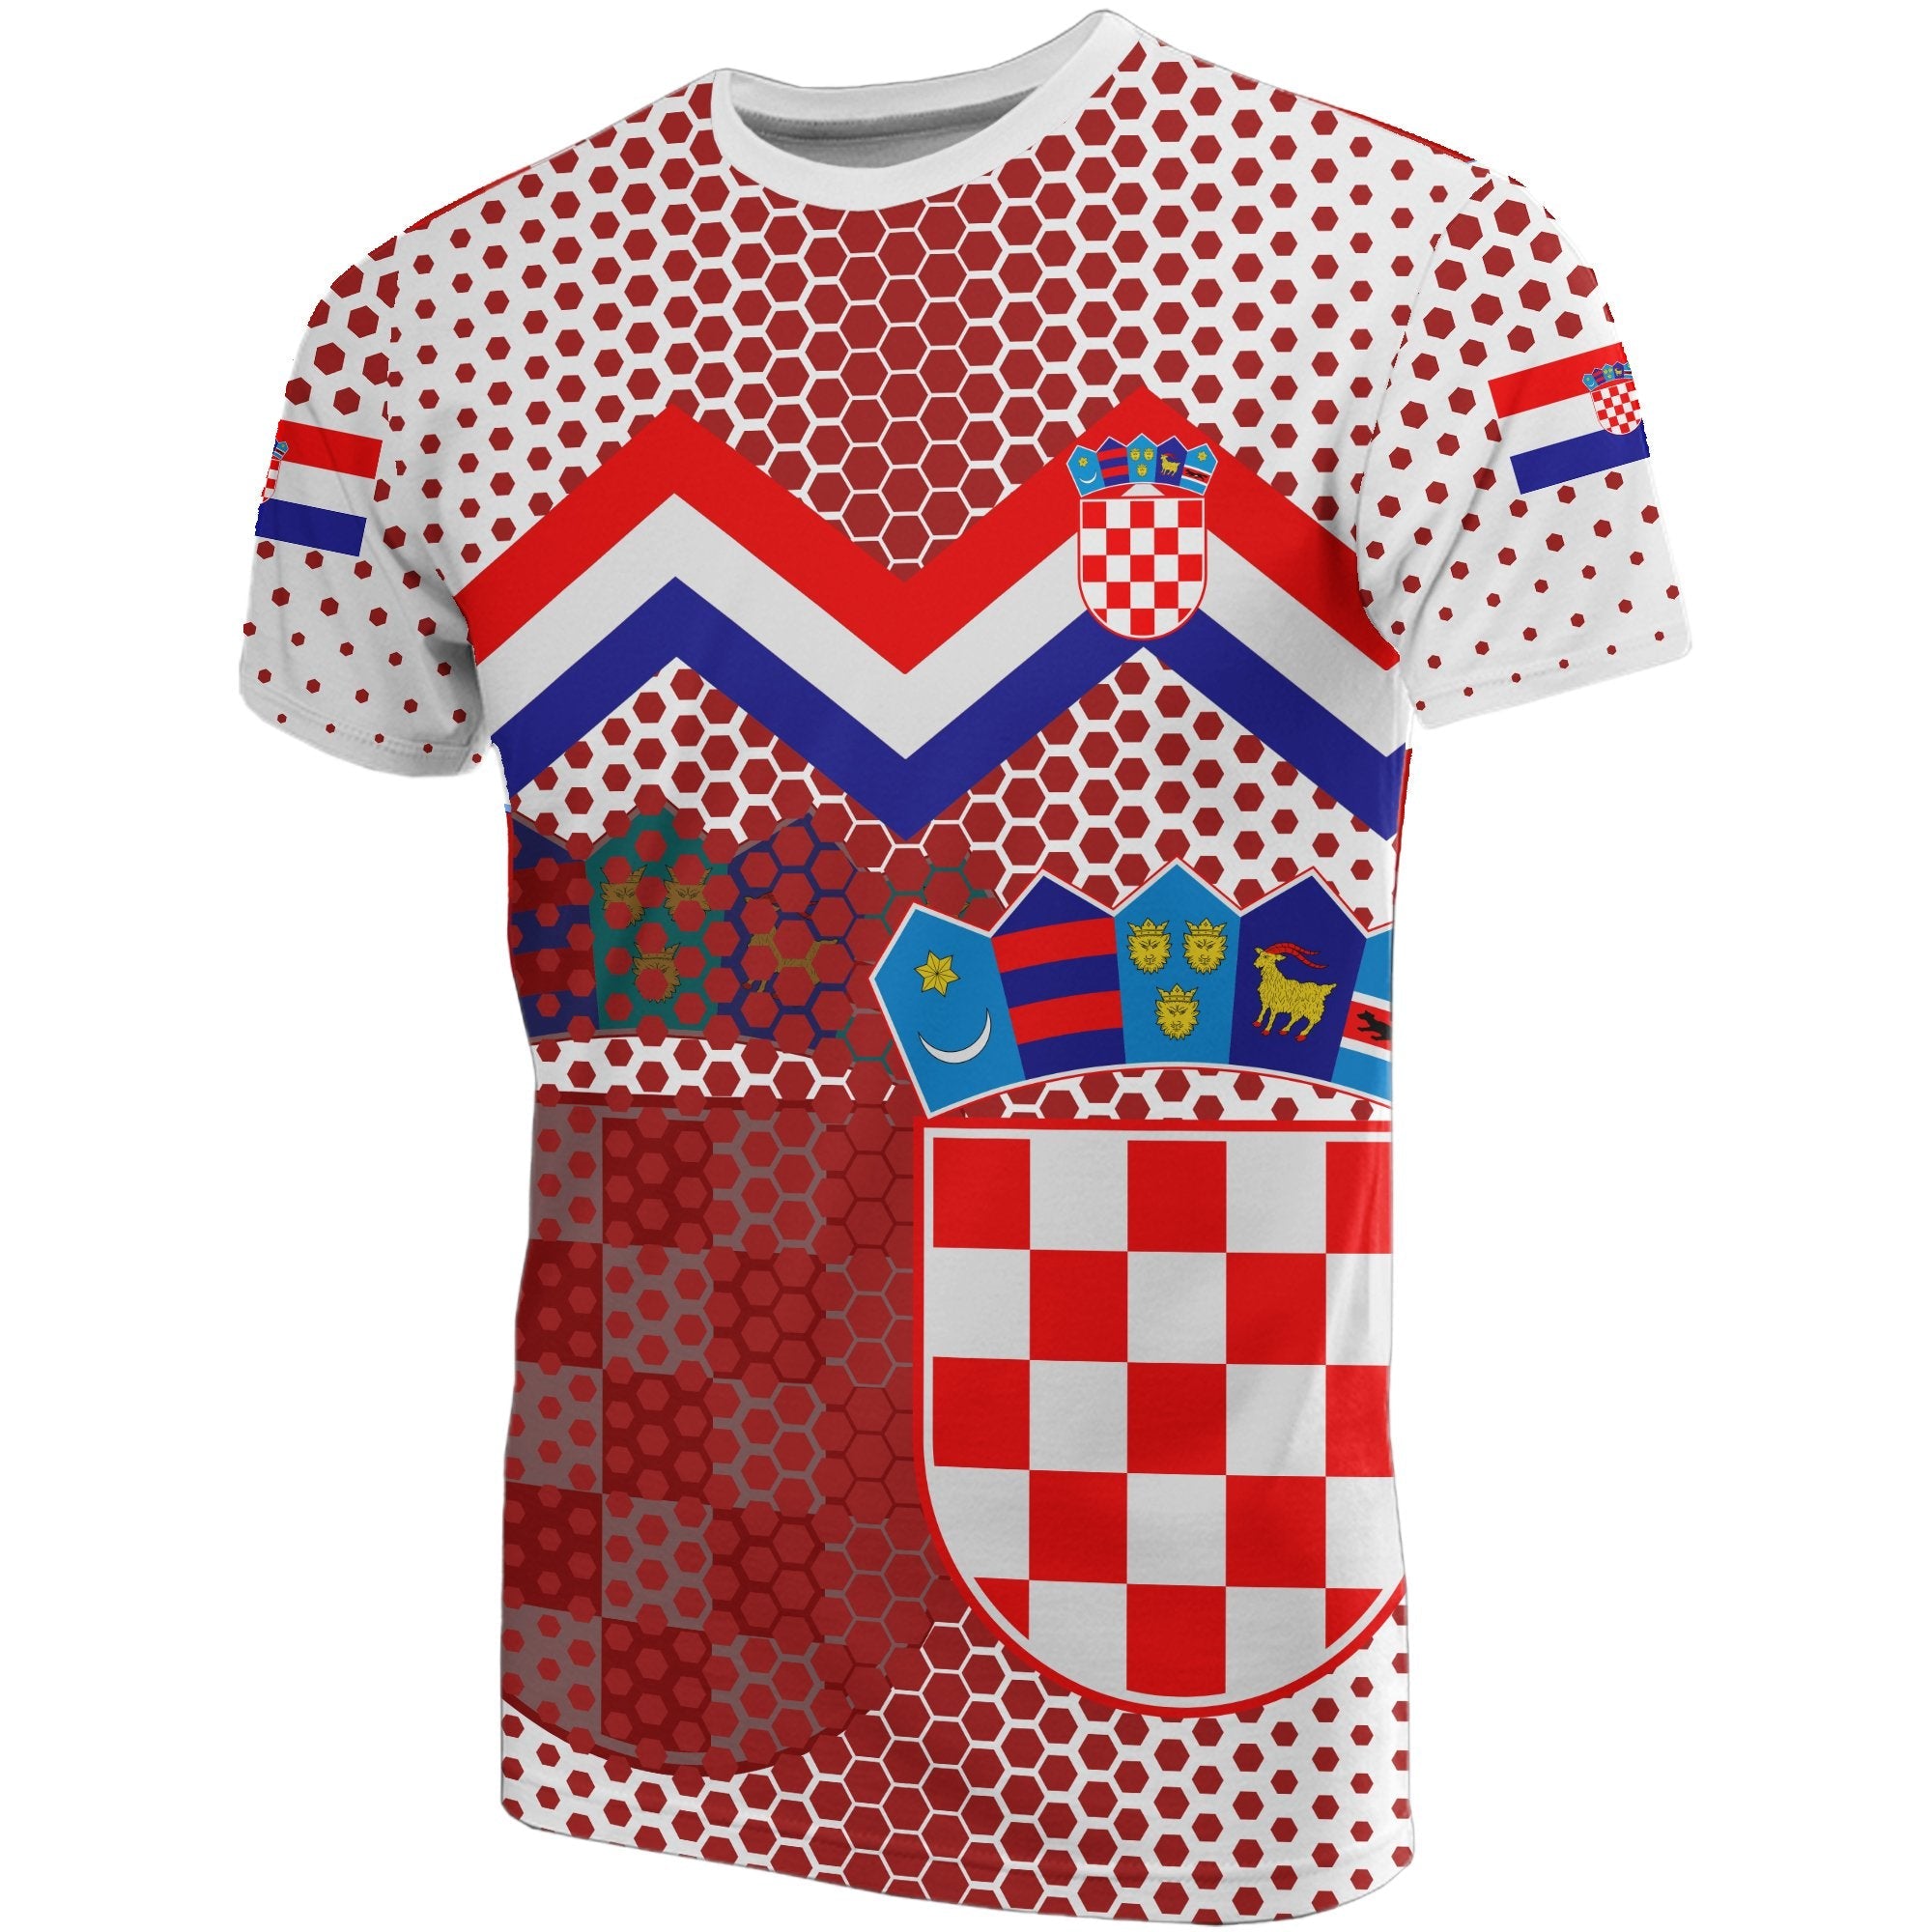 hrvatska-croatia-coat-of-arms-t-shirt-white